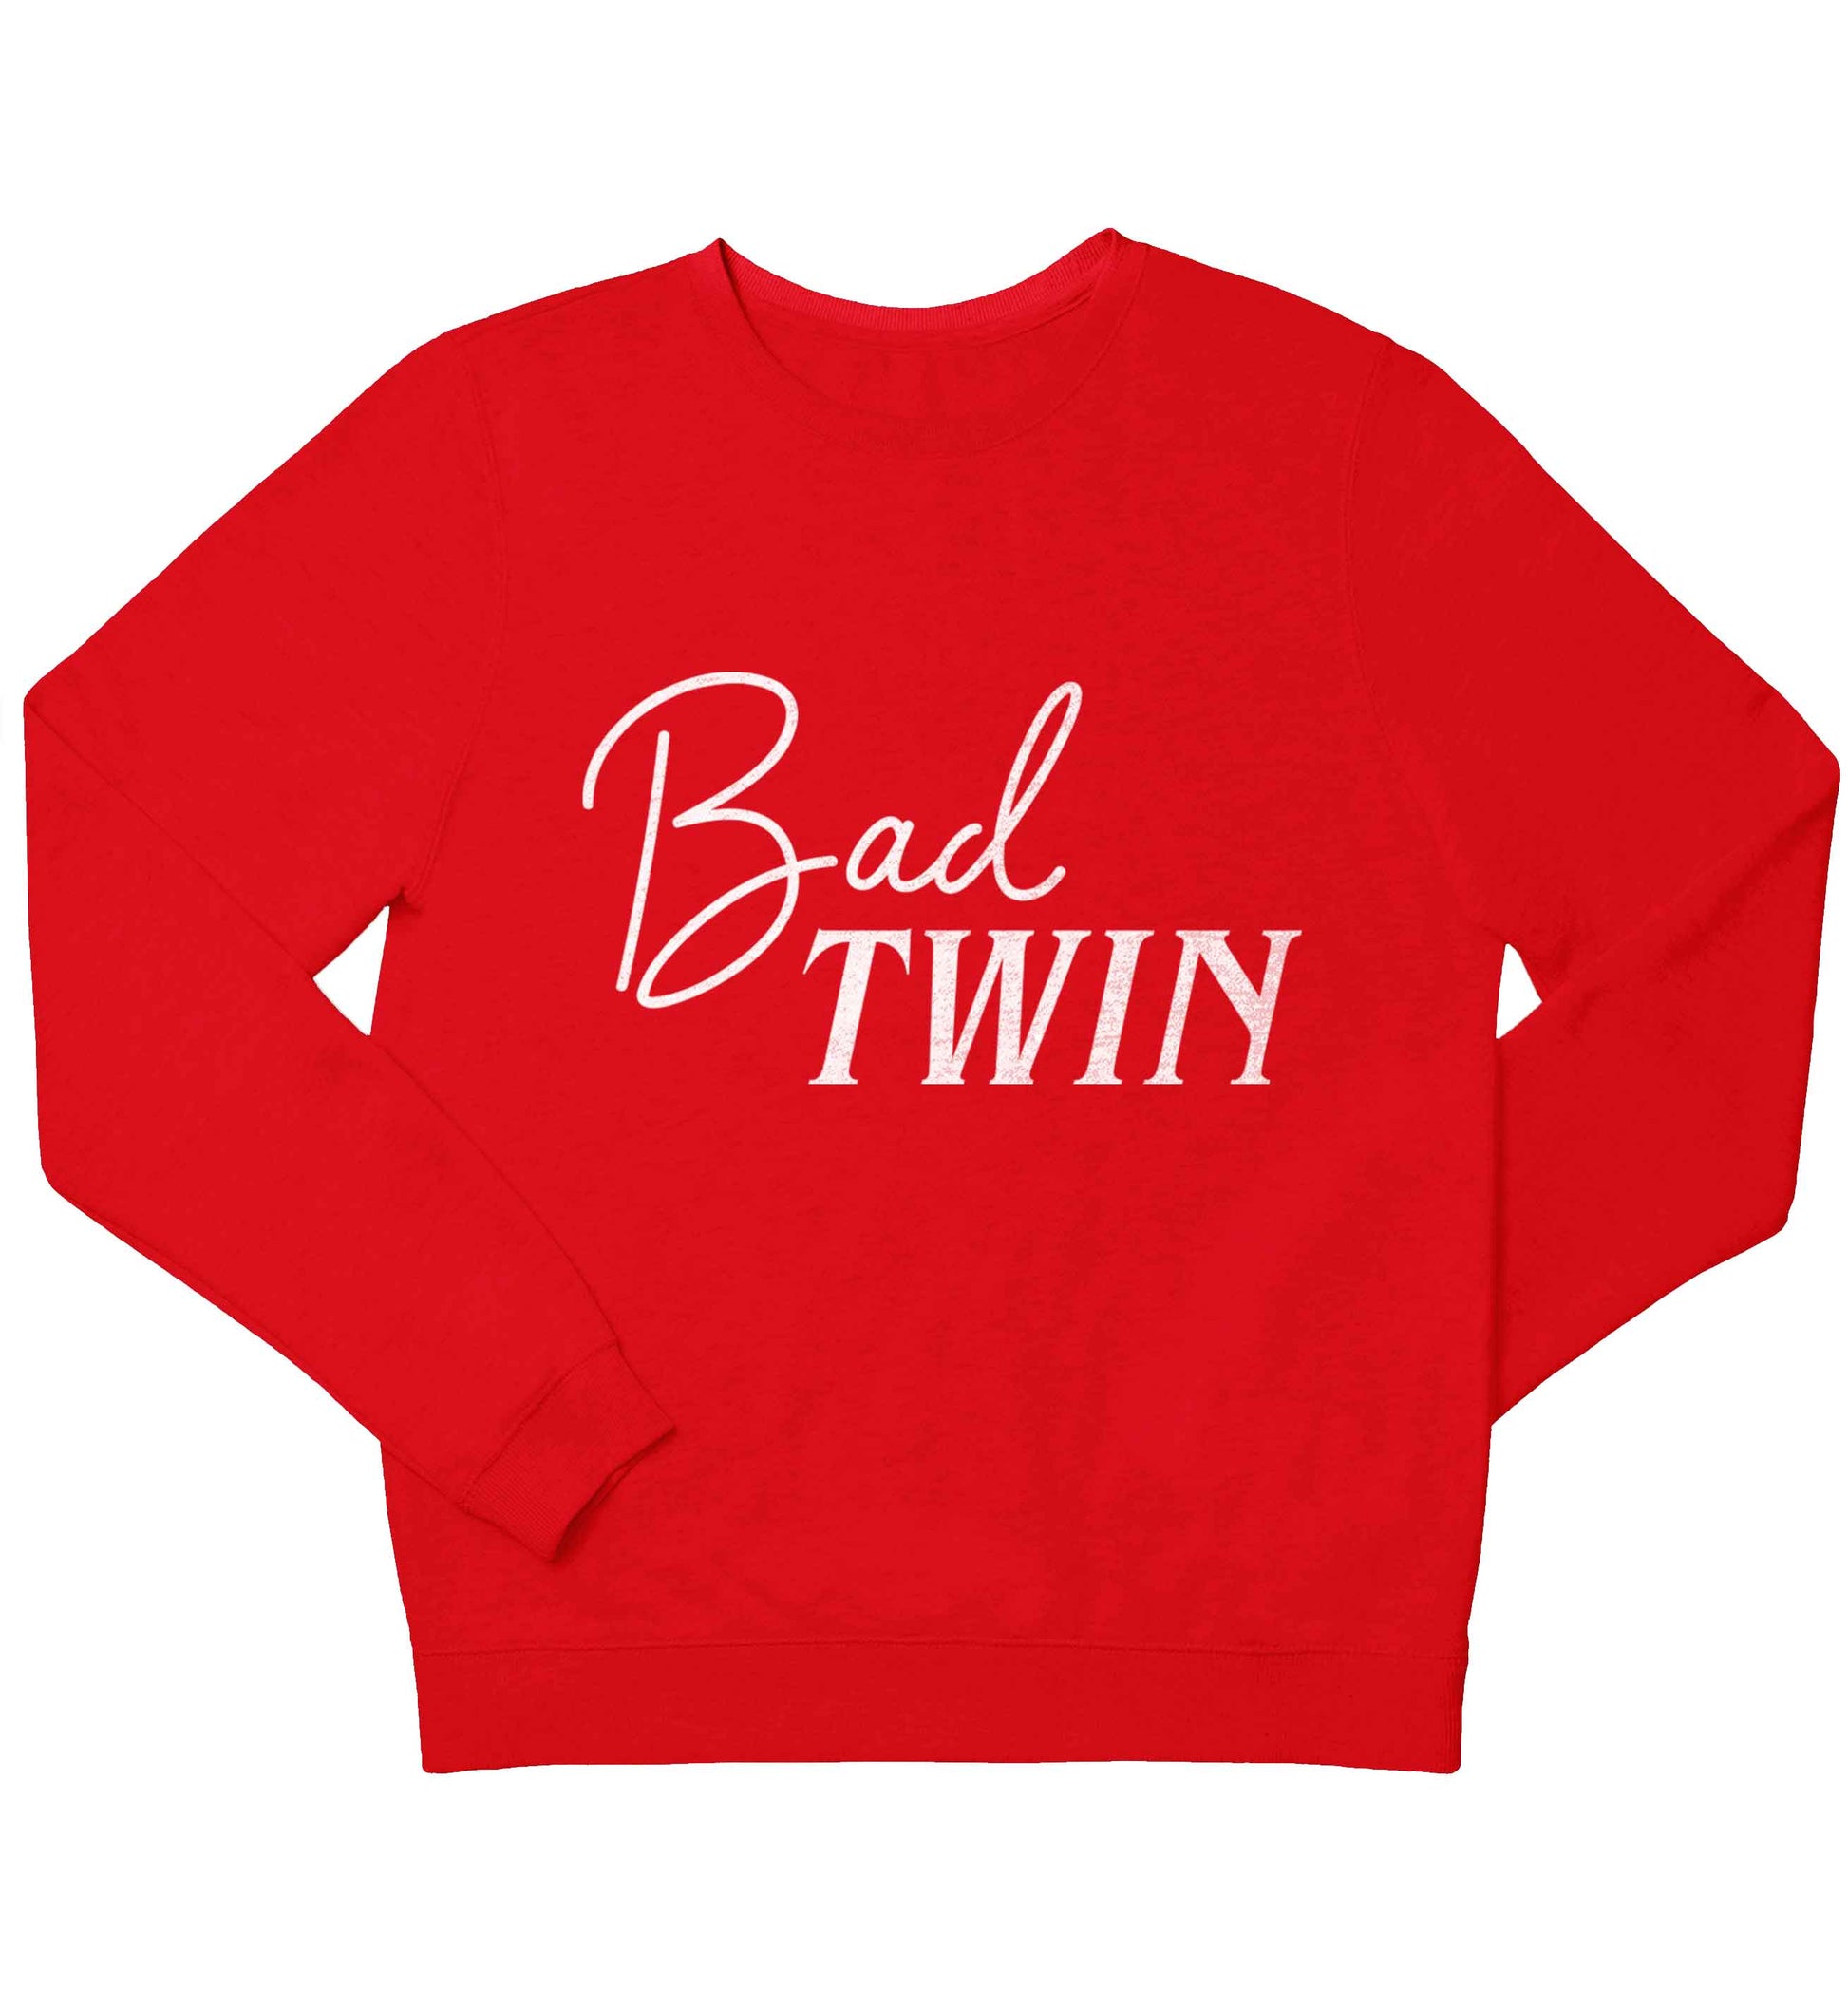 Bad twin children's grey sweater 12-13 Years